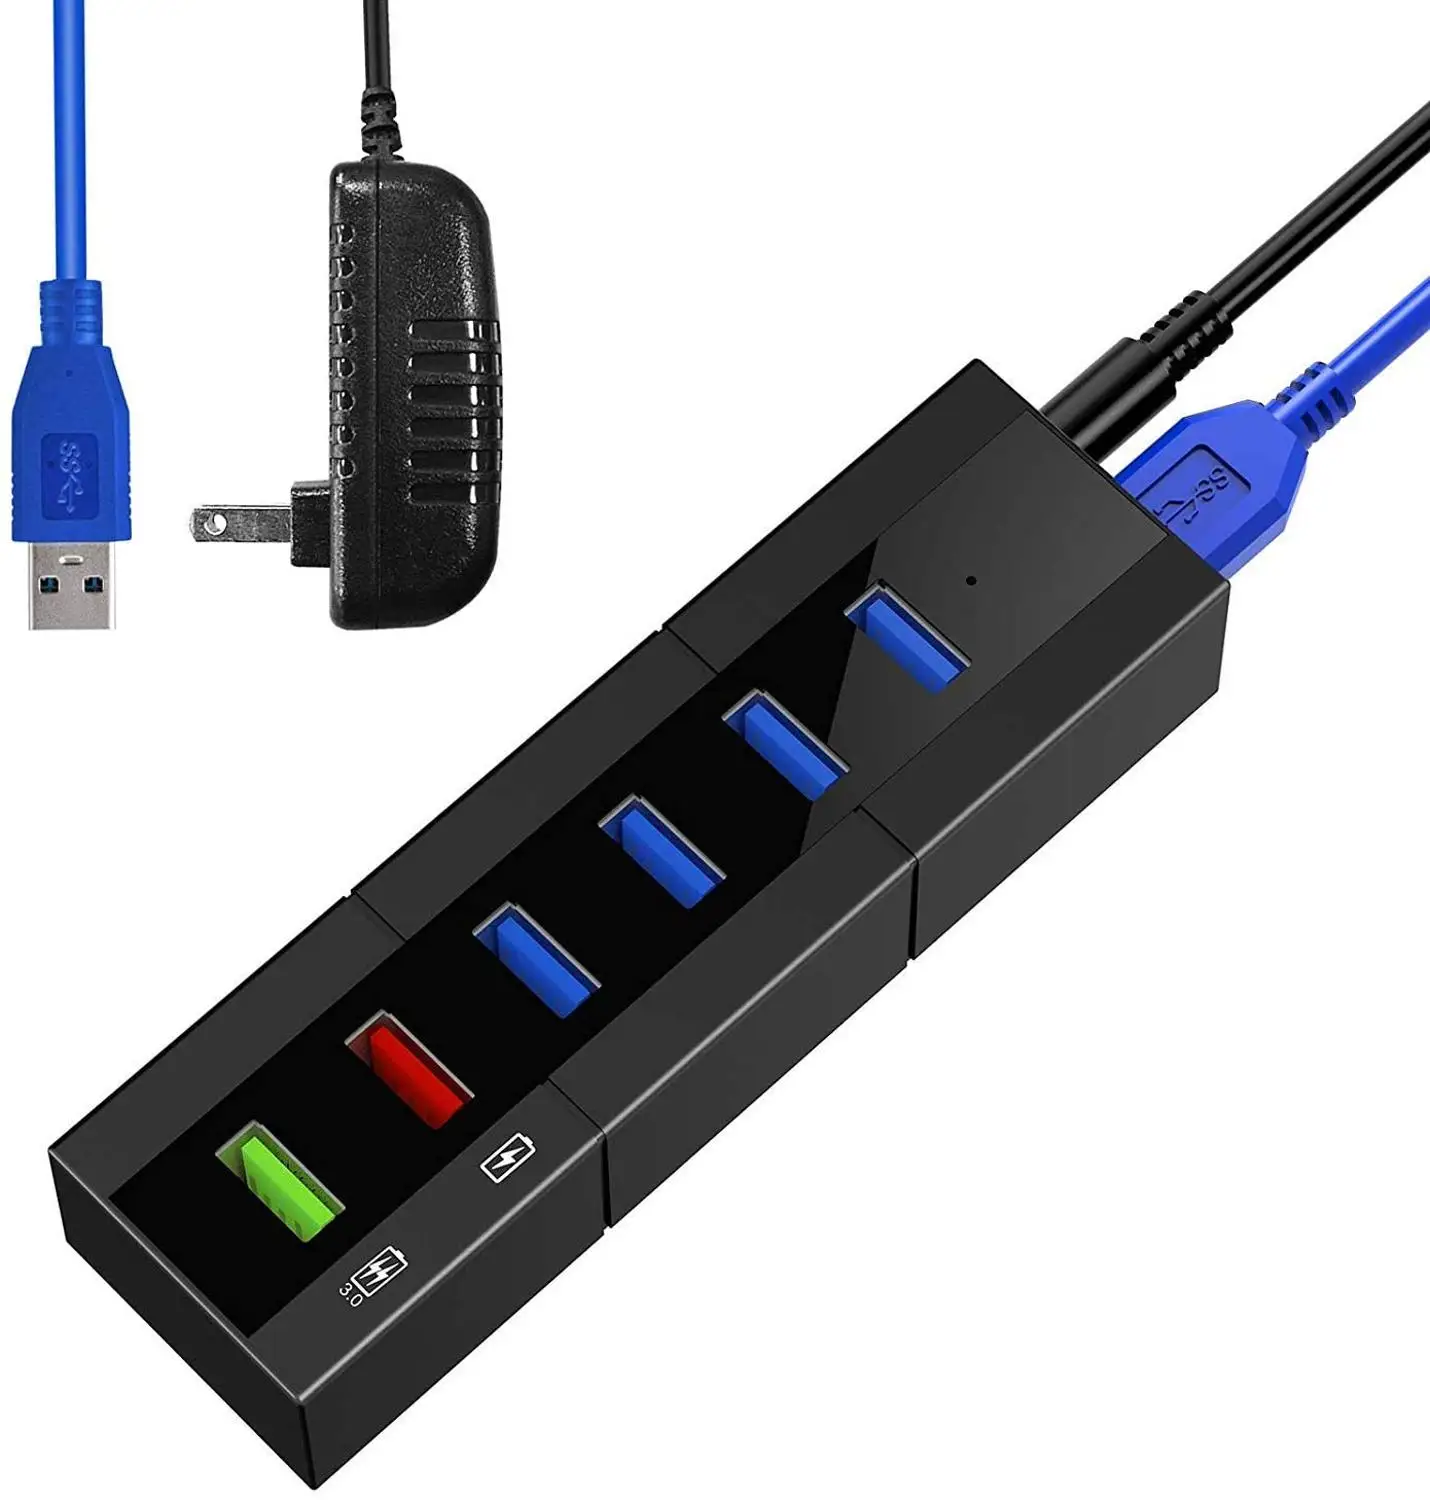 

6 Port USB Hub 3.0 ,24W USB Hub Powered with 4 High Speed USB 3.0 Data Transfer Ports & 2 Smart Charging Ports Power Adapter